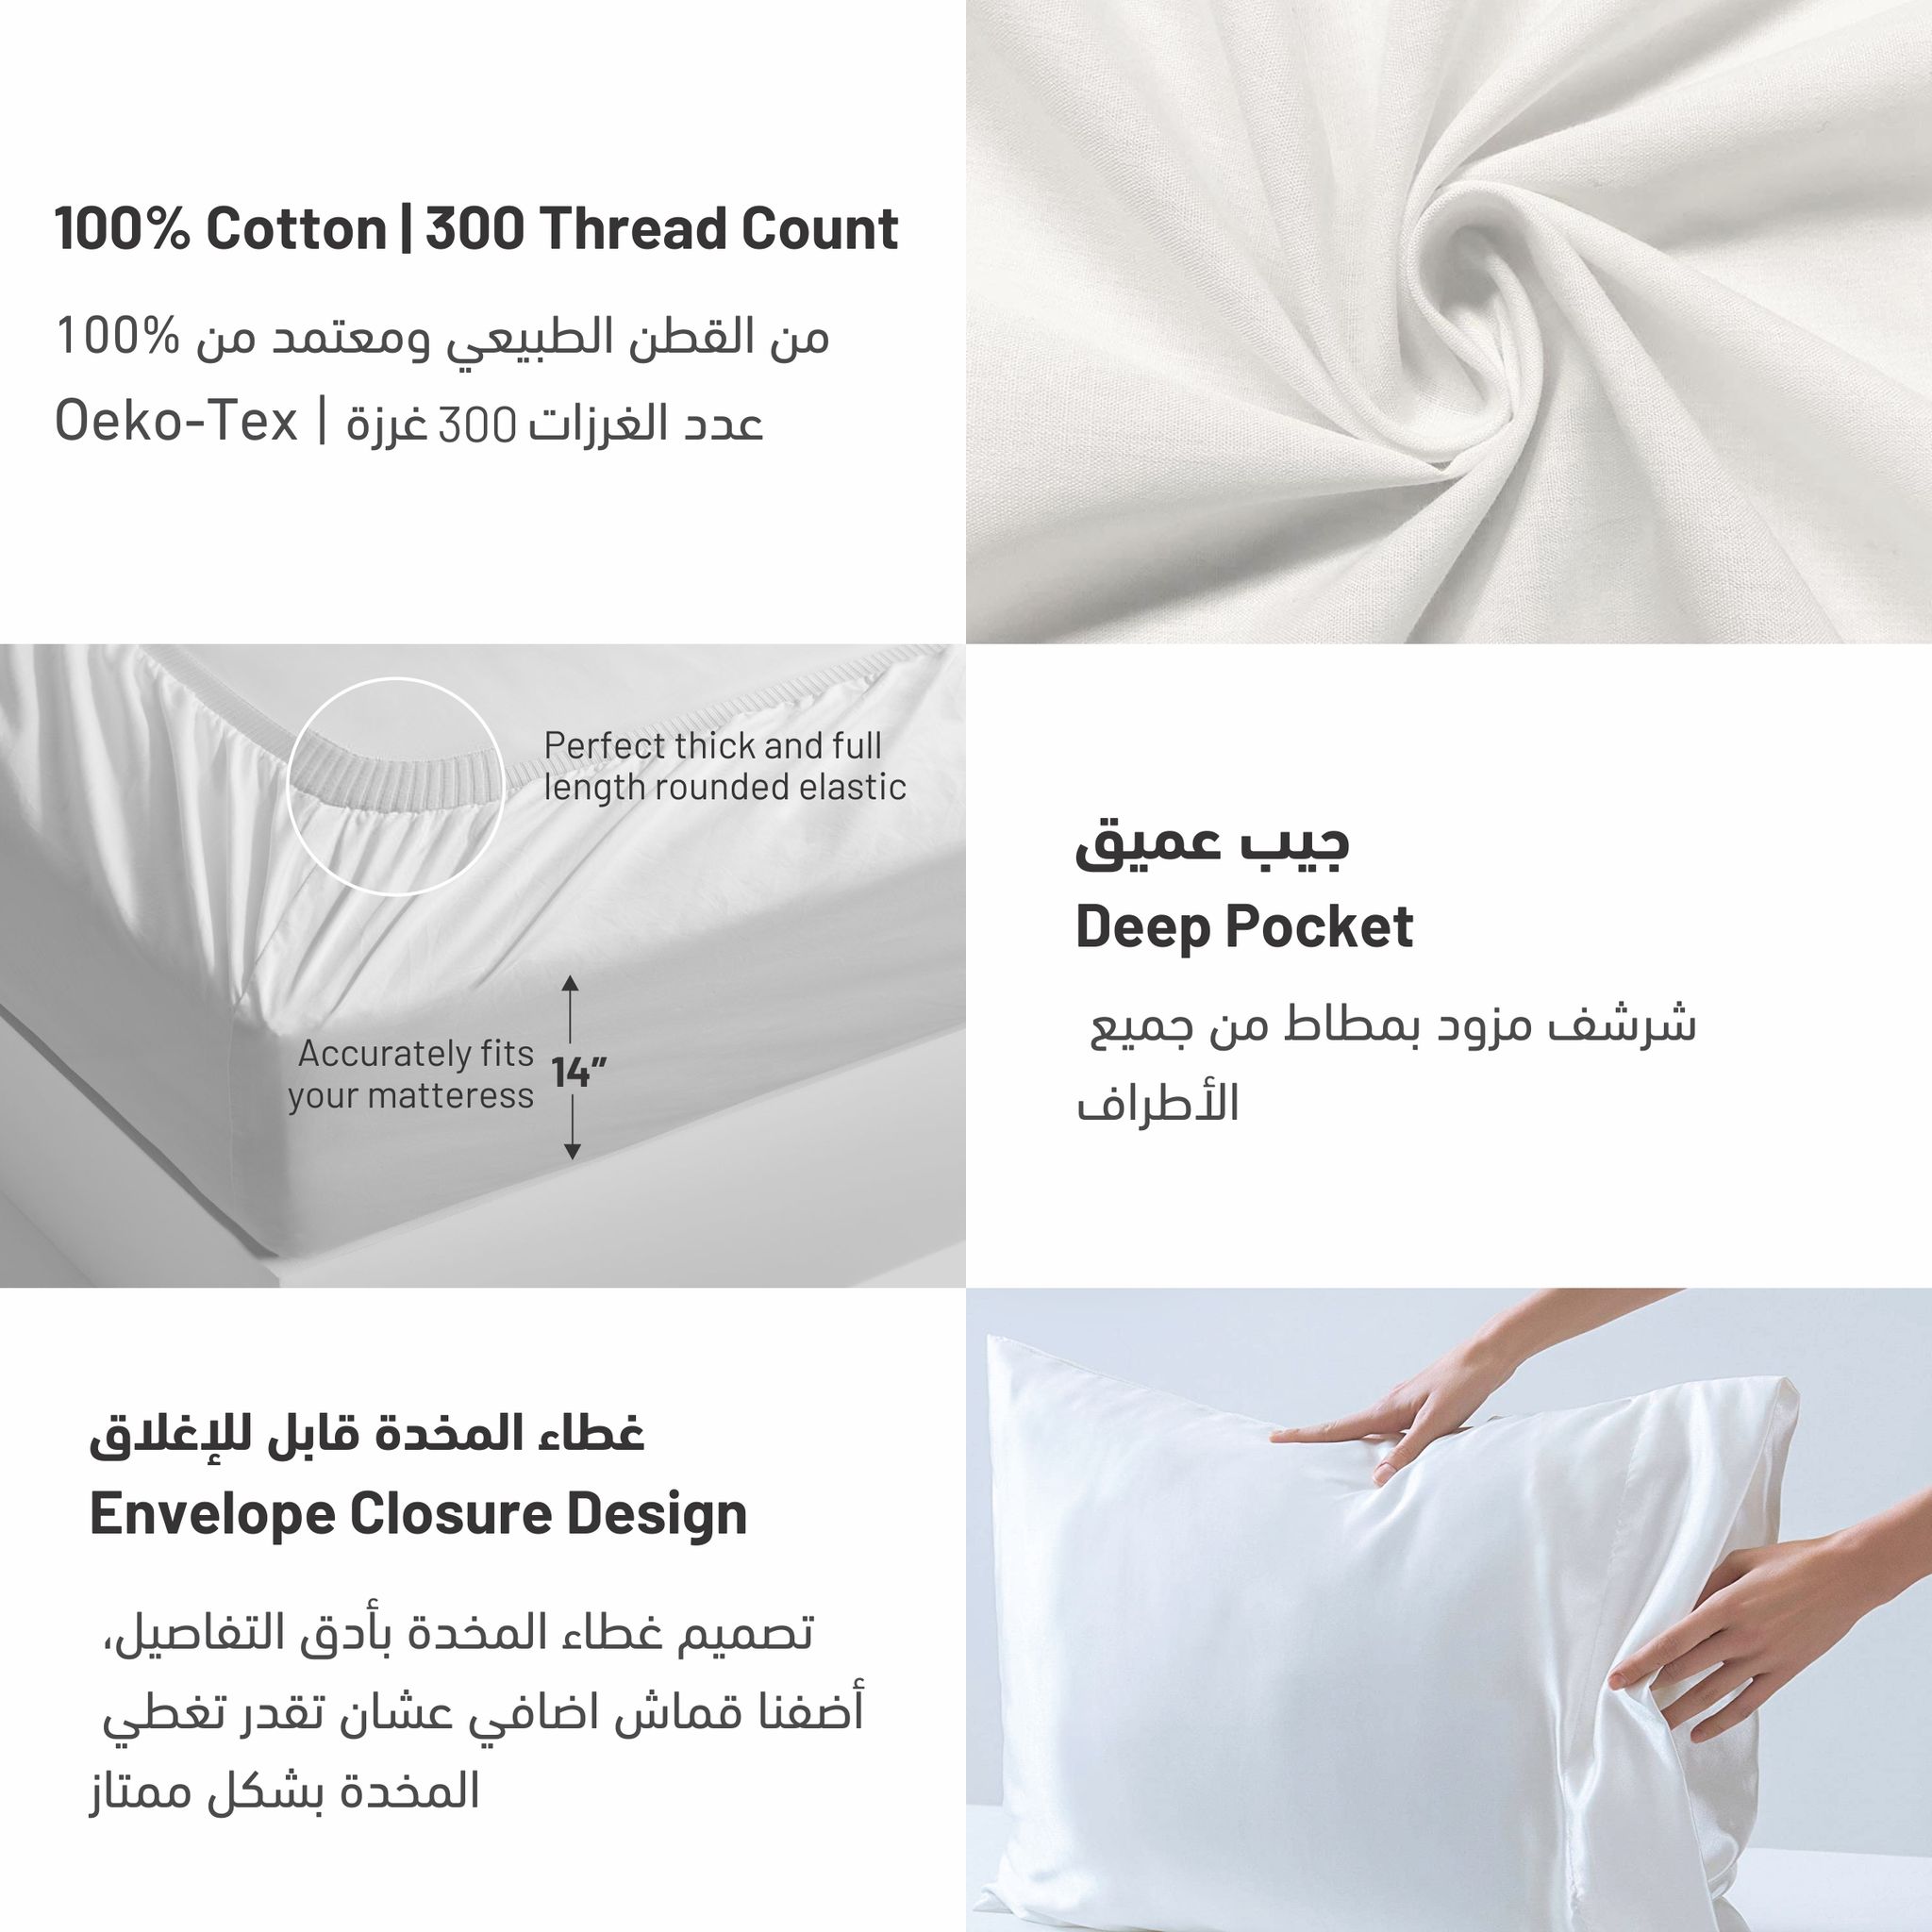 Seamless Mandala Print Cotton Comforter Set 5-Piece Single Light Gray